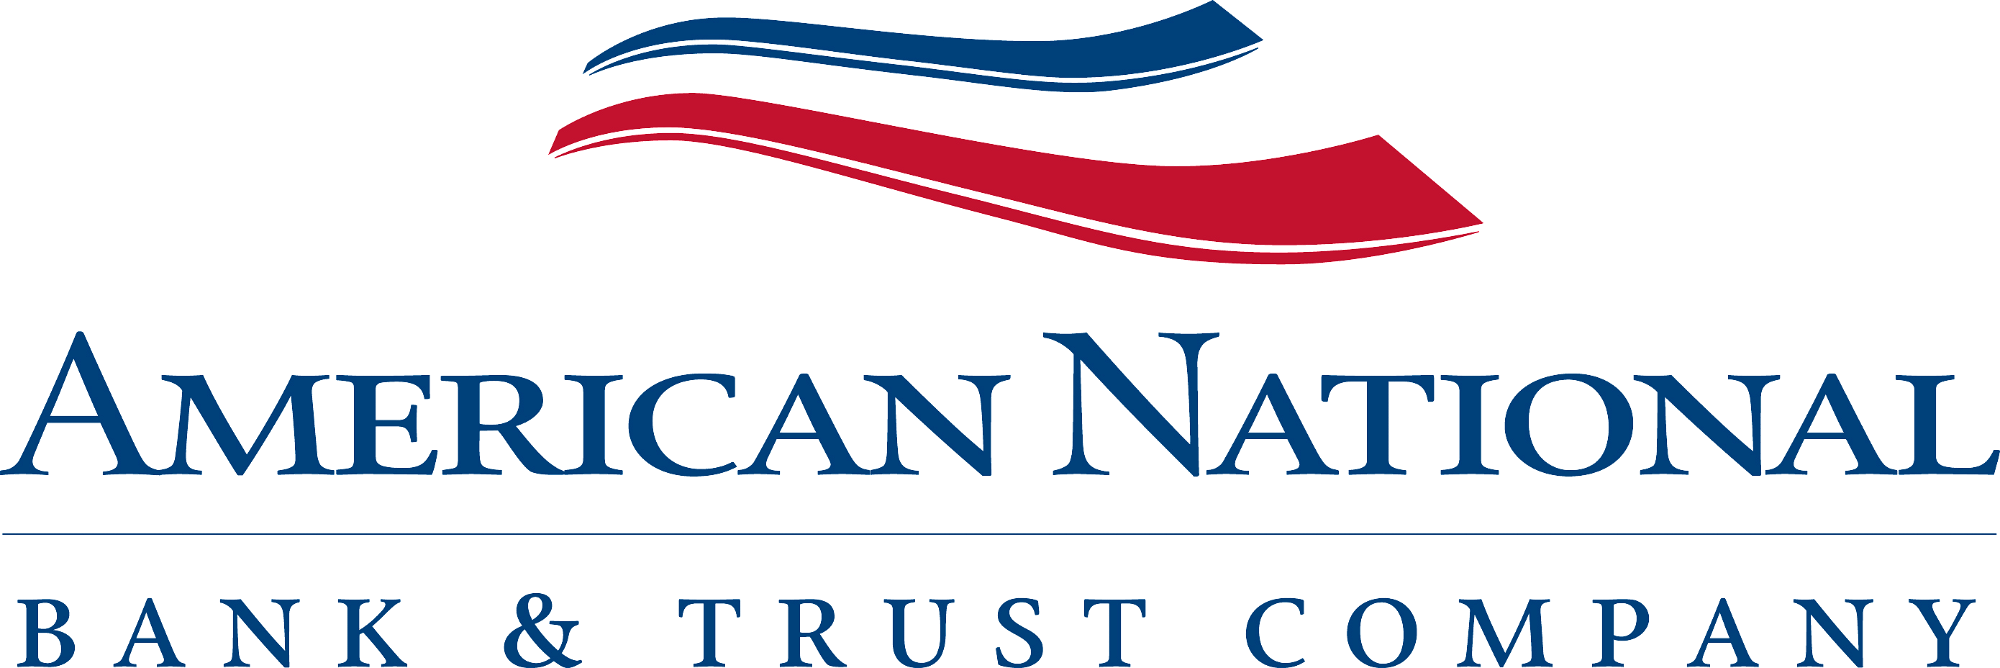 American National Bankshares Logo